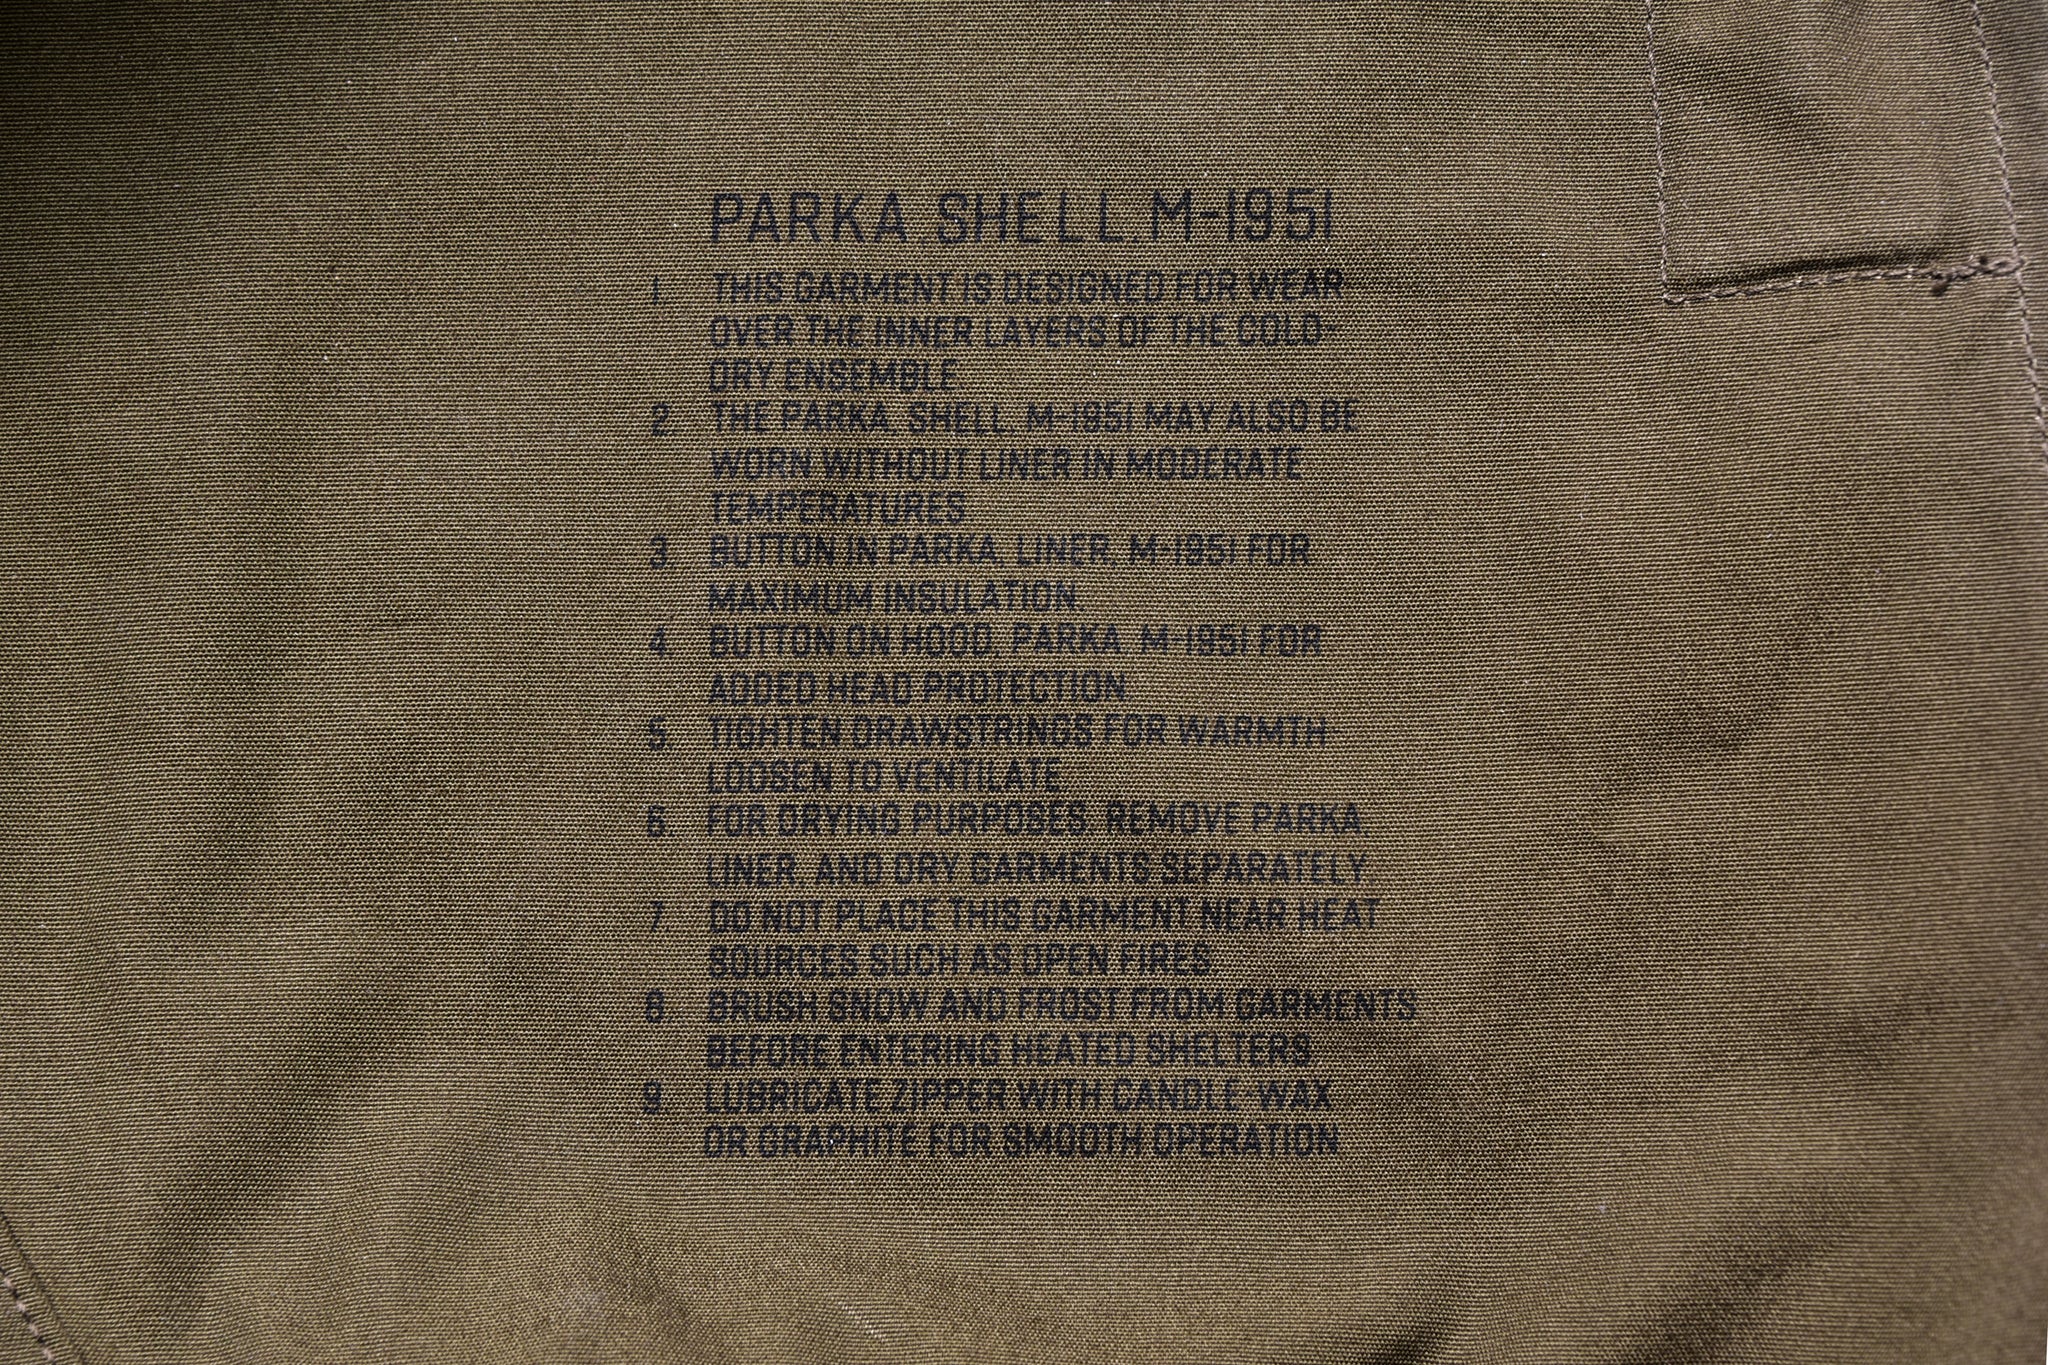 PARKA-SHELL, M-1951 (MODEL 220)